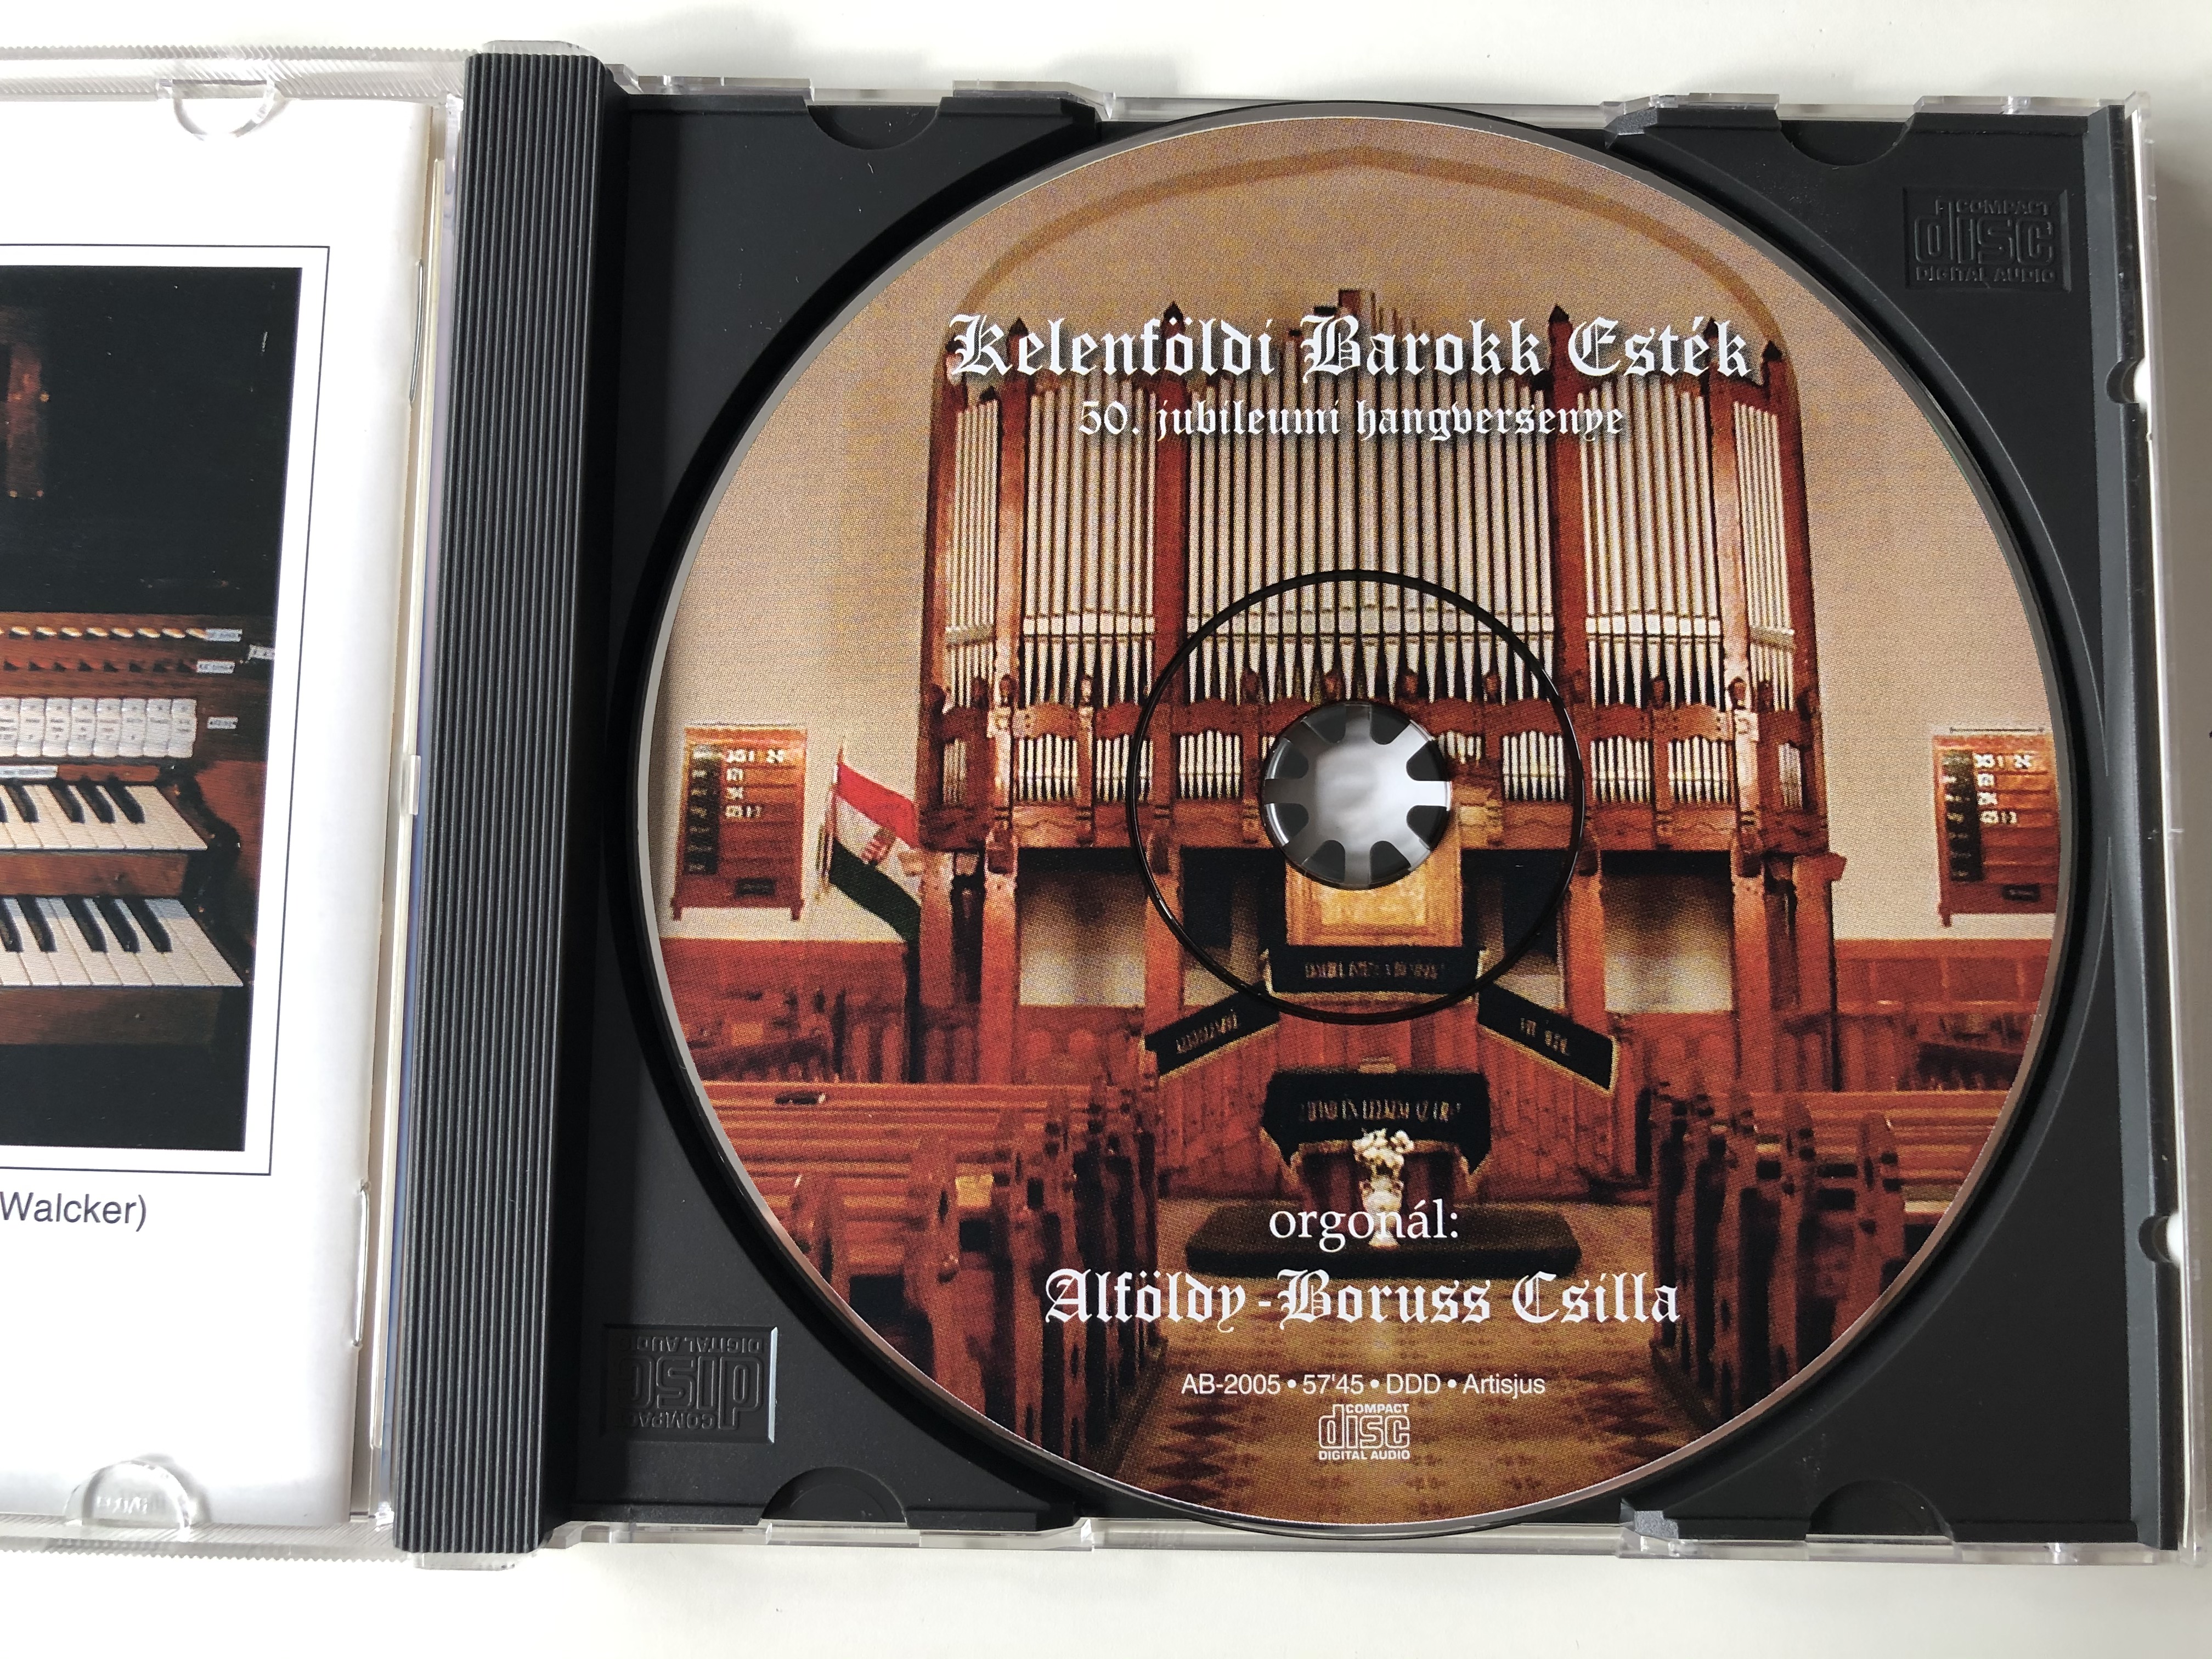 kelenfoldi-barokk-estek-50.-jubileumi-hangversenye-orgonal-alfoldy-boruss-csilla-audio-cd-2004-ab-2005-6-.jpg